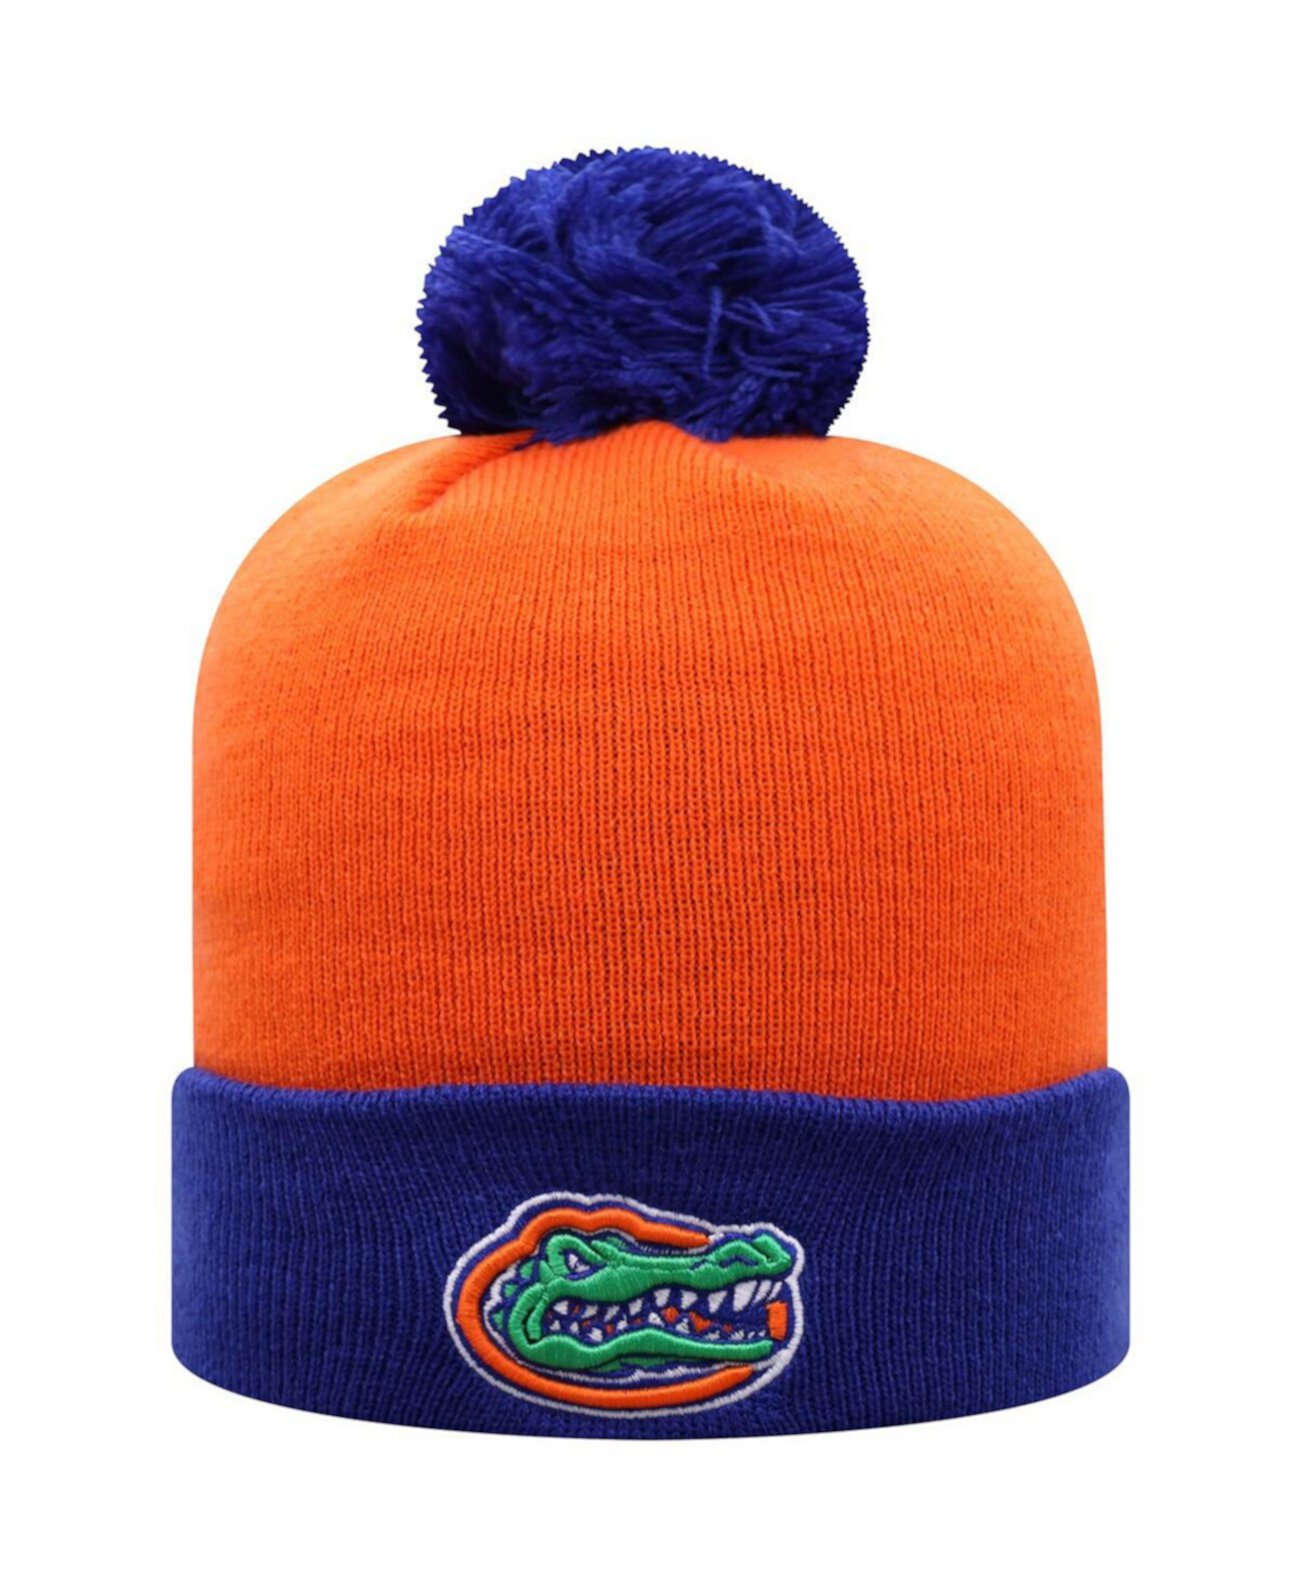 Мужская двухцветная вязаная шапка с манжетами и помпонами Orange и Royal Florida Gators Core Top of the World